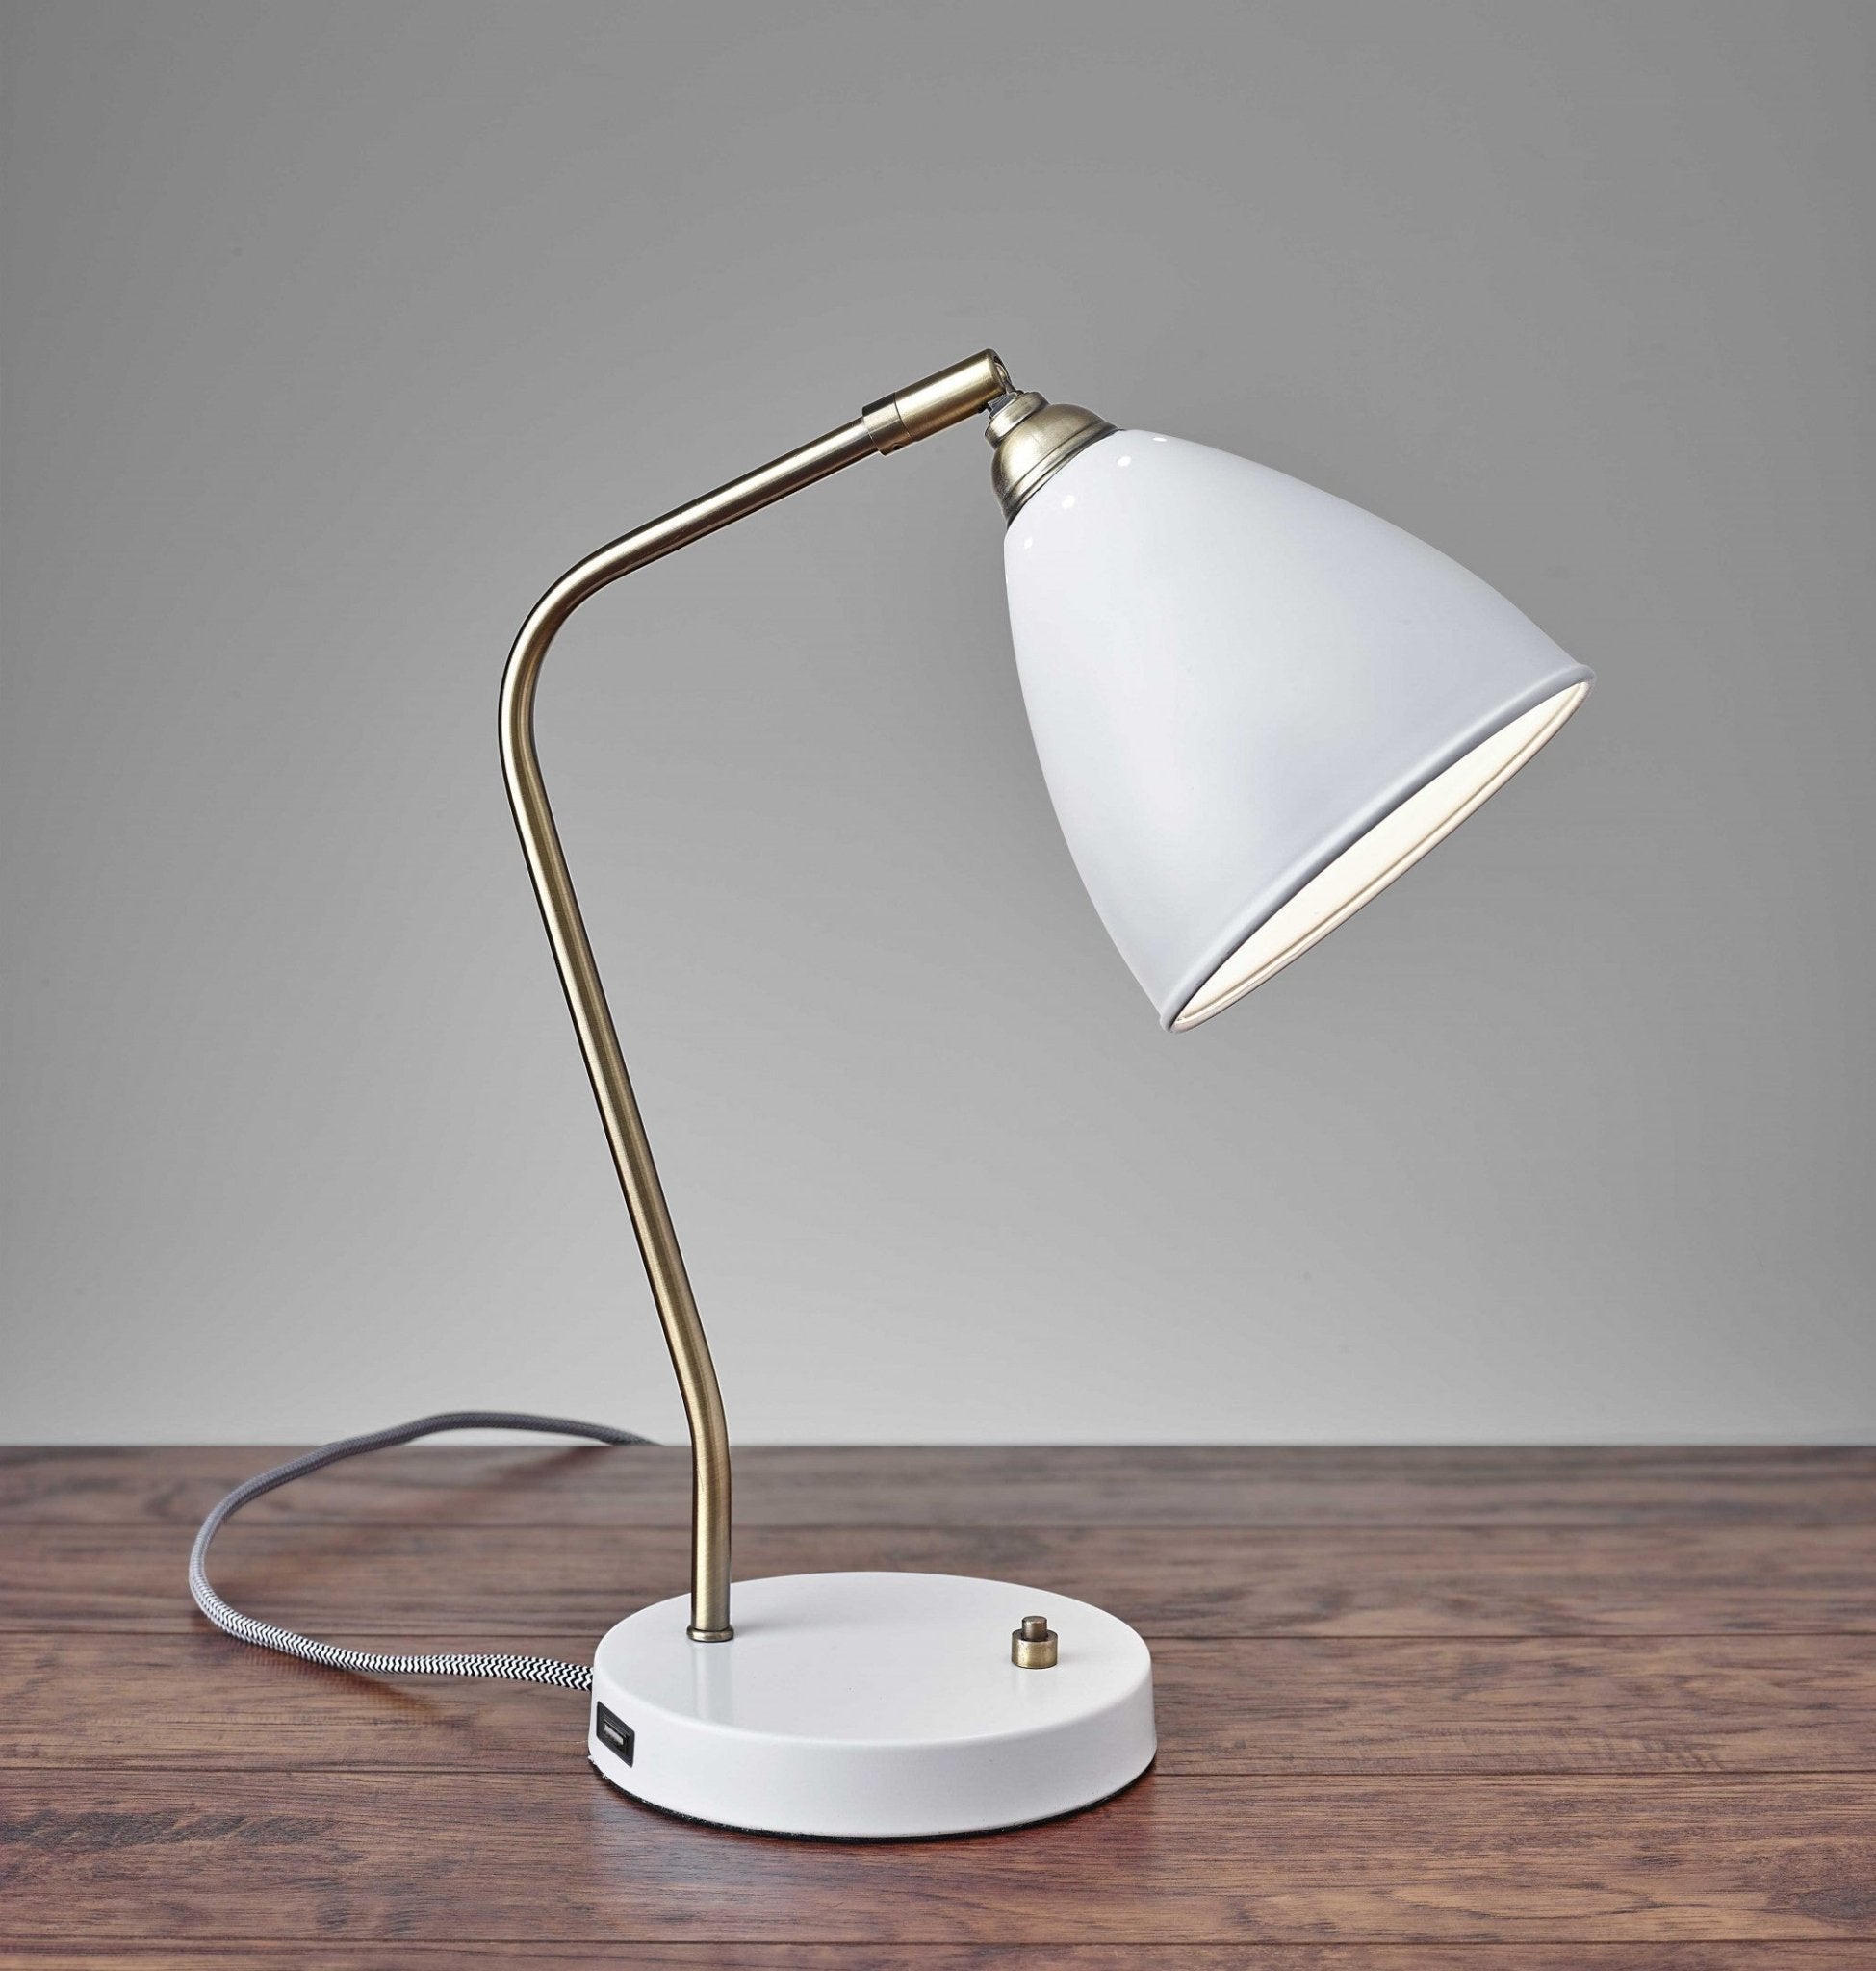 Grey-Metal-And-Antique-Brass-Adjustable-Usb-Port-Desk-Lamp-Table-Lamps